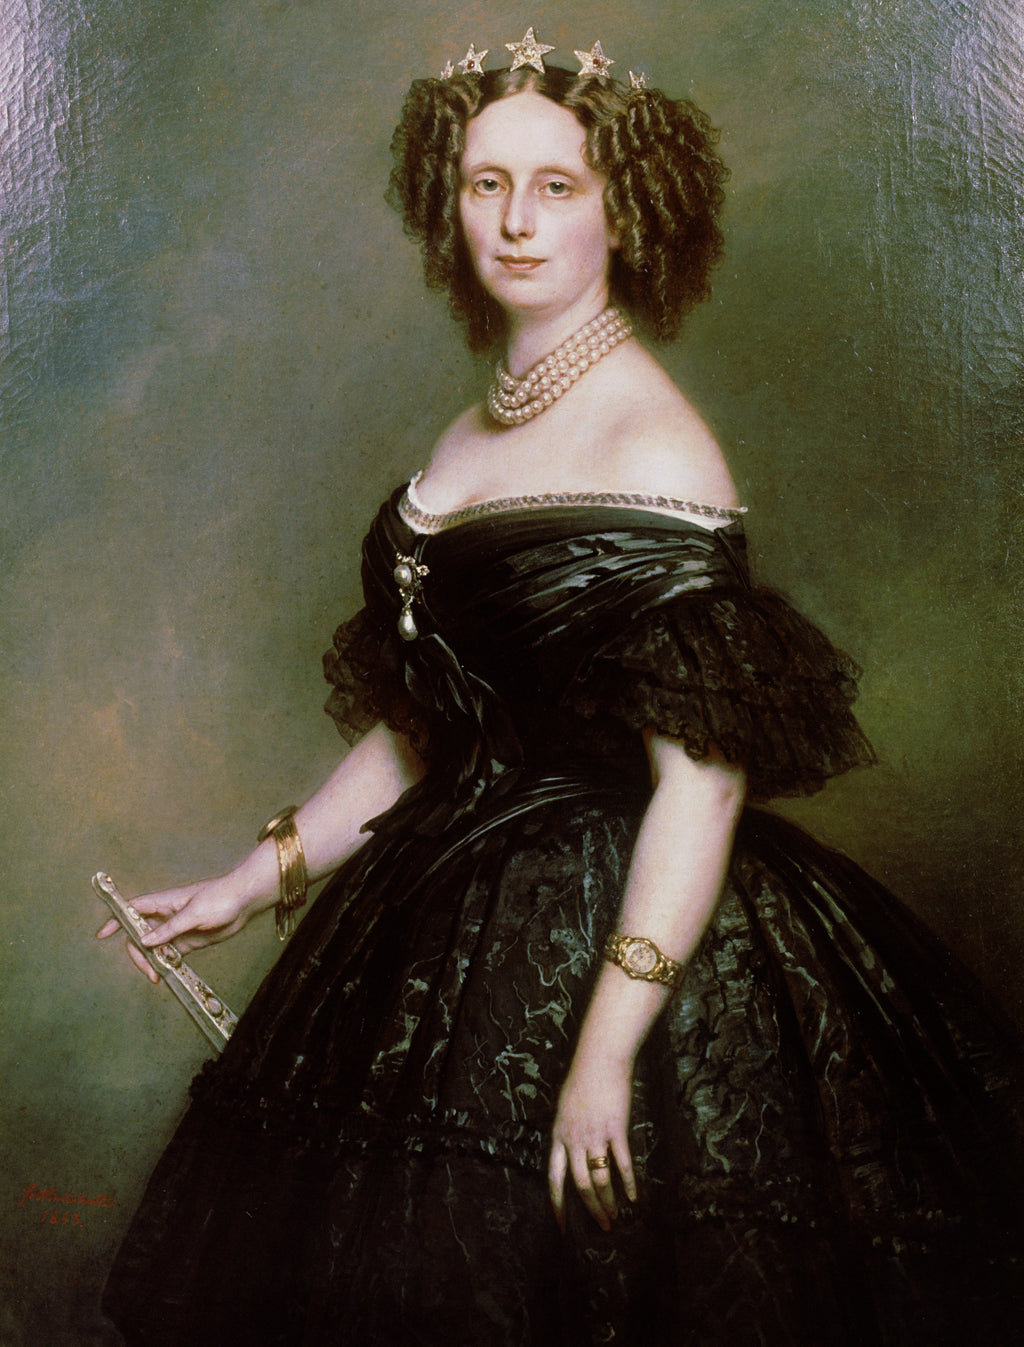 Portrait of Queen Sophie of Netherlands, born Sophie of Württemberg